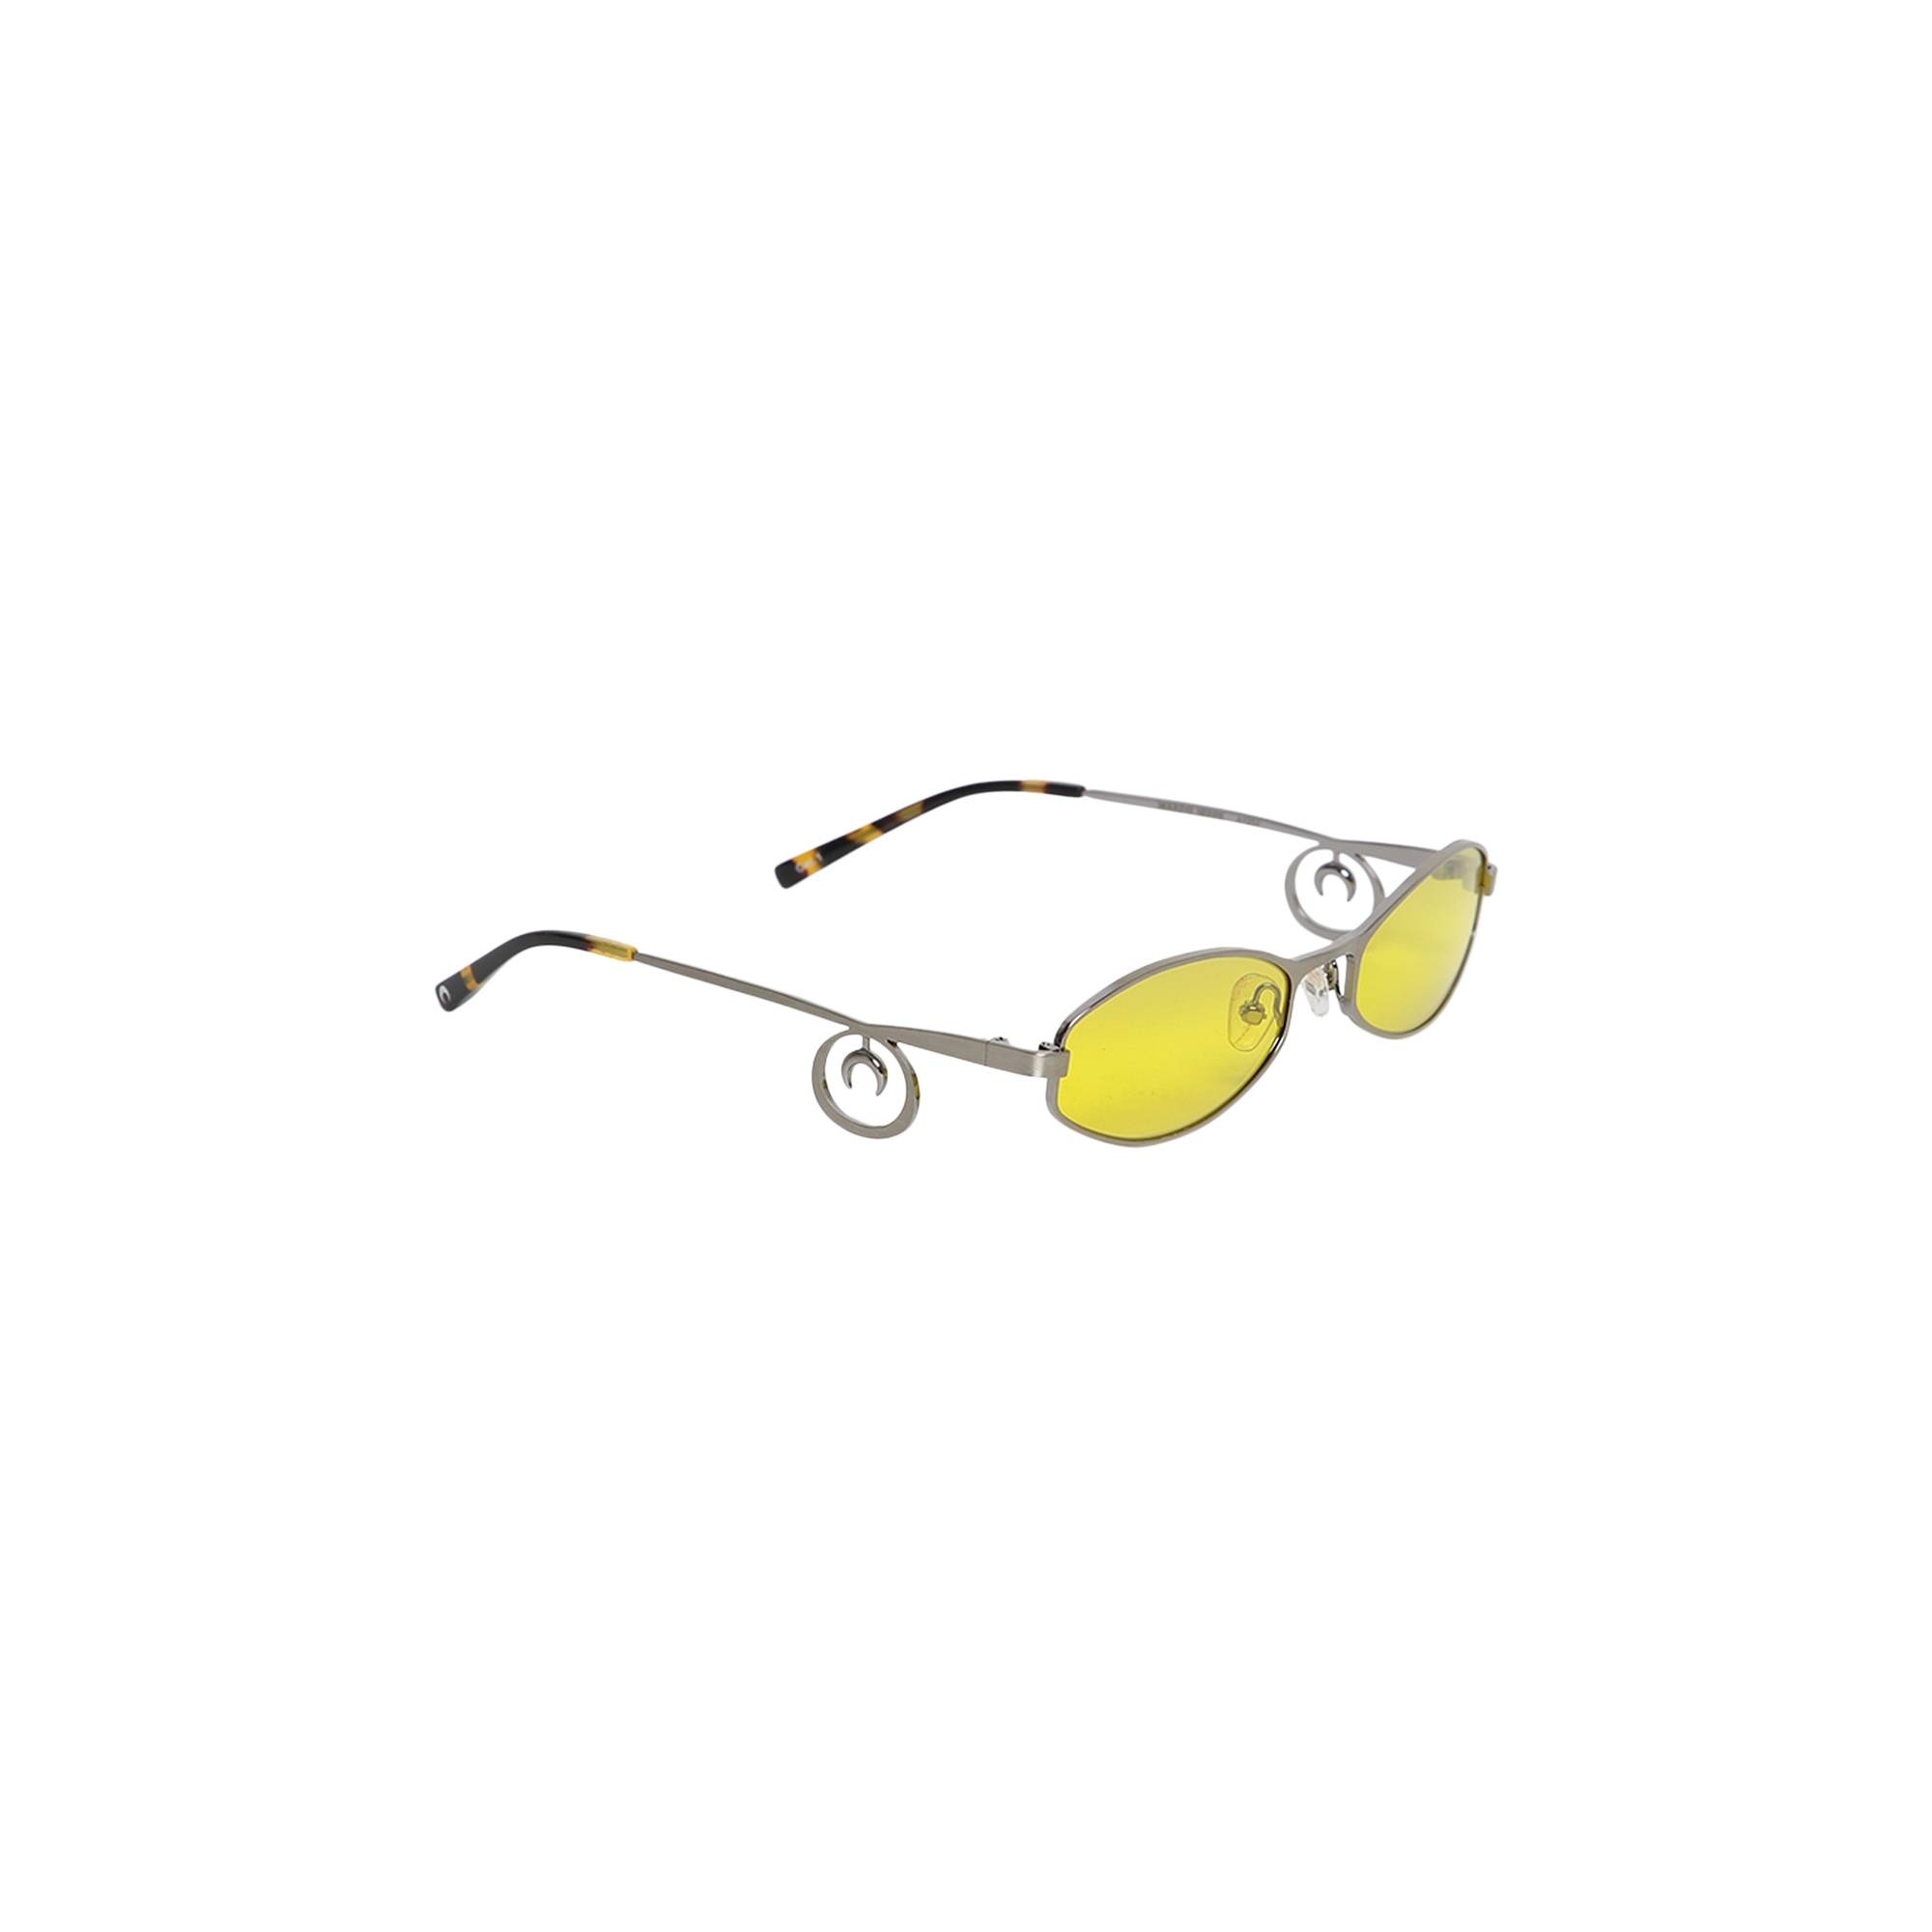 Marine Serre x Vuarnet Swirl Frame Oval Sunglasses 'Yellow' - 2